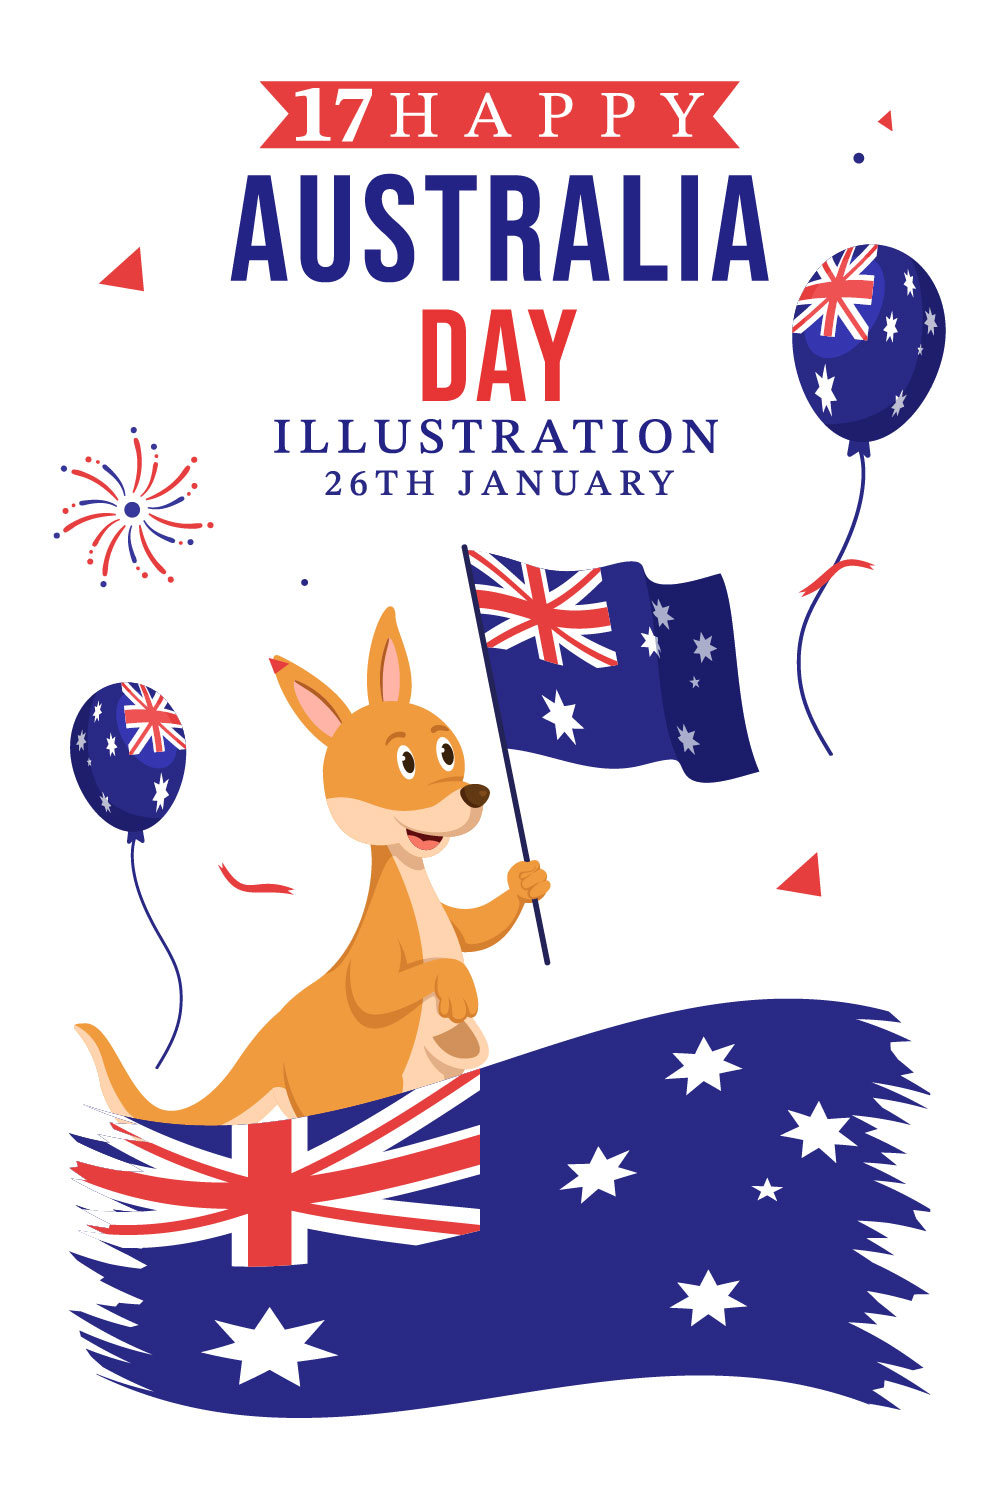 Happy Australia Day Illustration pinterest image.